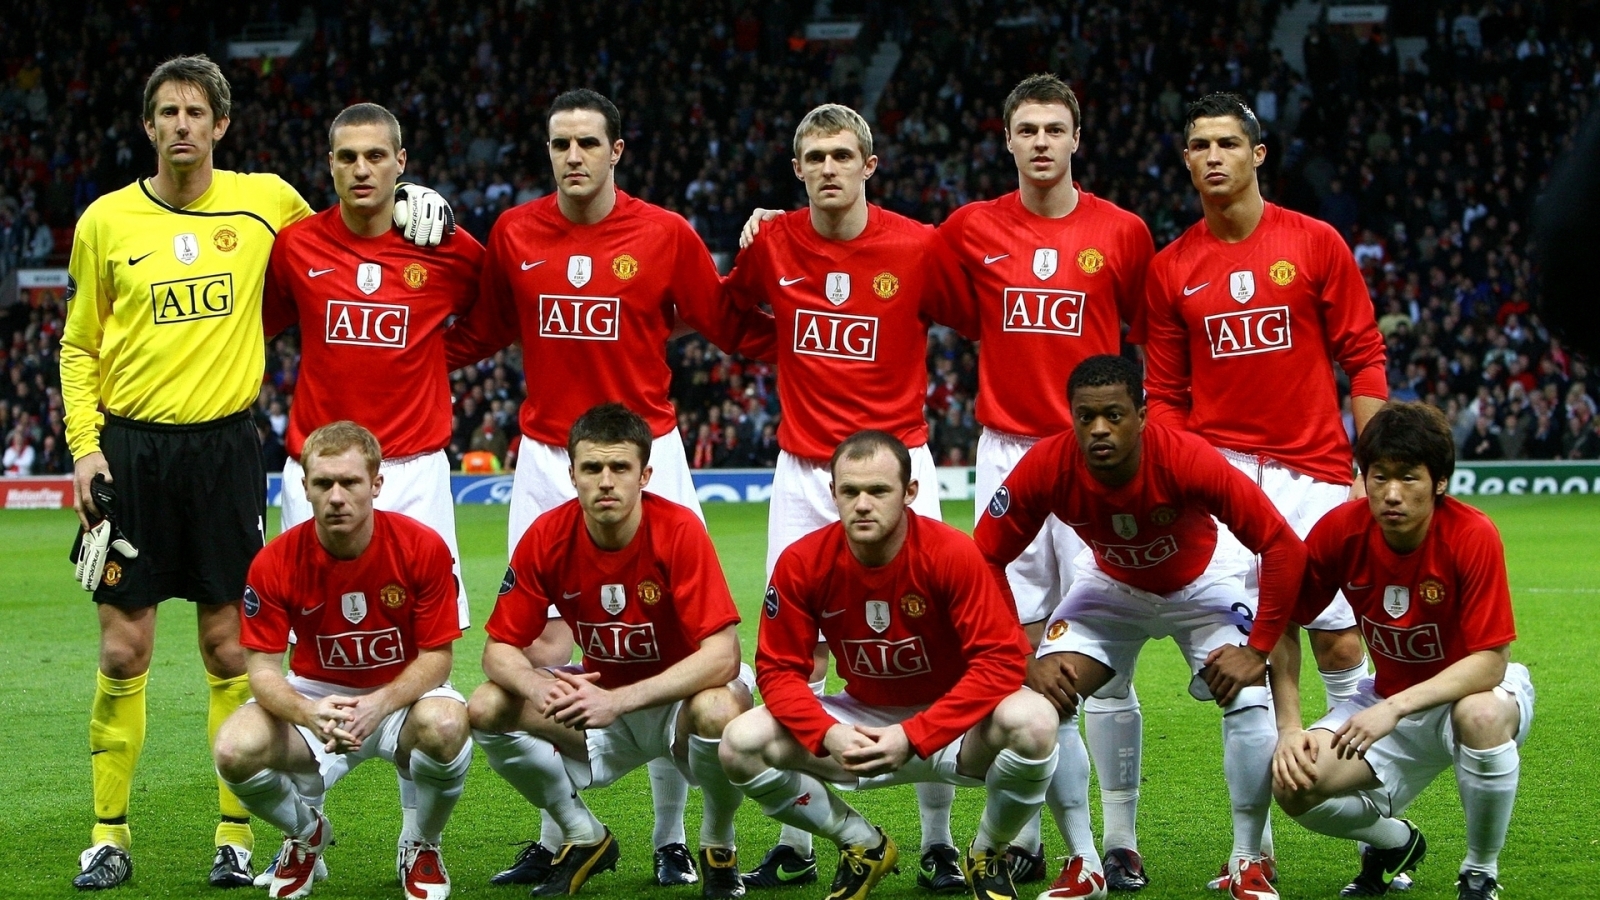 Manchester United Team for 1600 x 900 HDTV resolution